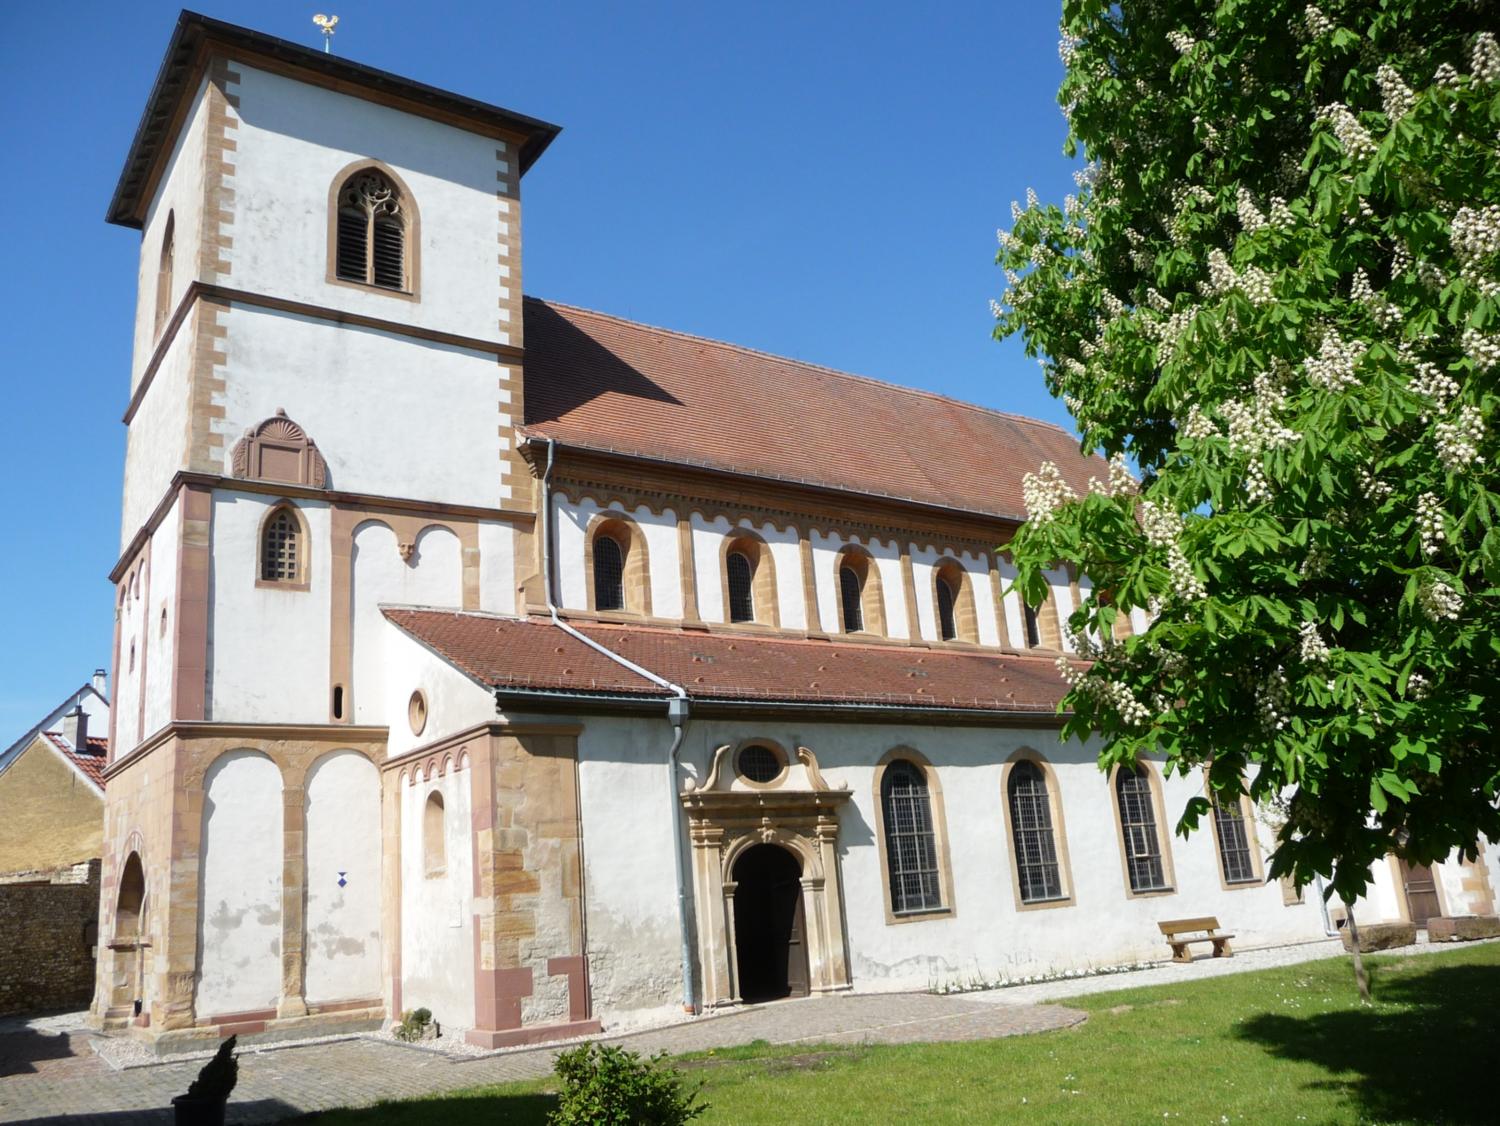 Basilika St. Lambert, Turm und Langhaus (c) Von Immanuel Giel - Eigenes Werk, CC BY-SA 4.0, https://commons.wikimedia.org/w/index.php?curid=48599012